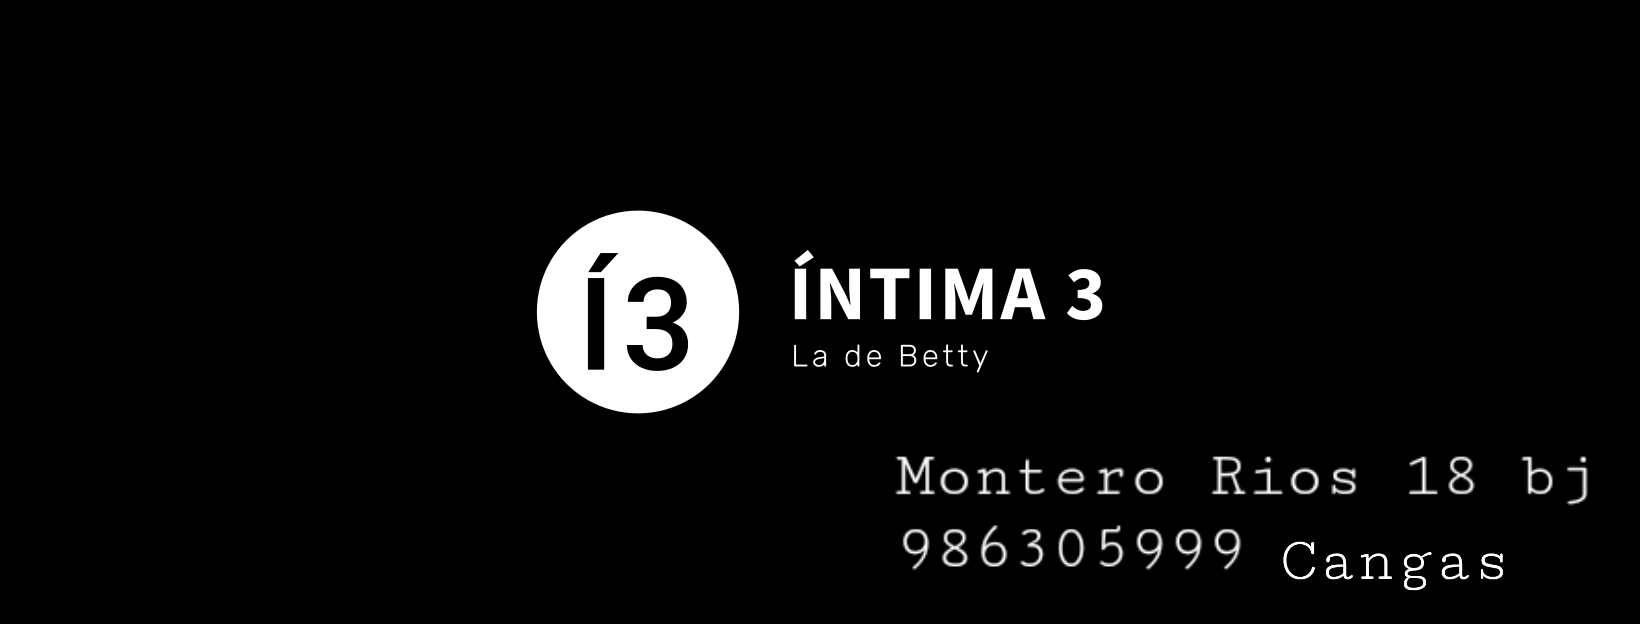 Logotipo INTIMA 3